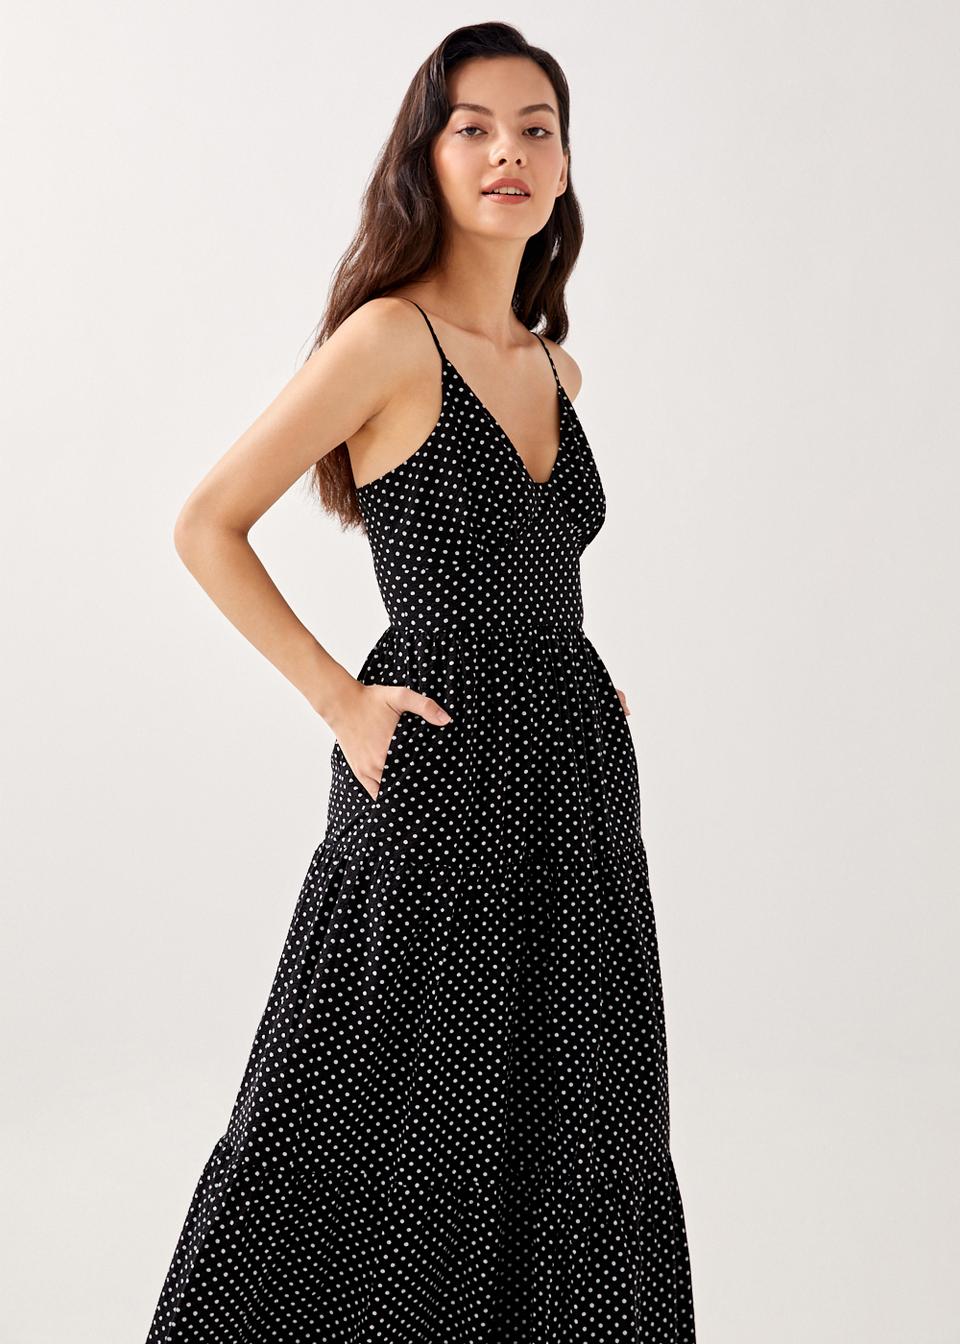 Buy Elienna Ruched Polka Dot Maxi Dress @ Love, Bonito Singapore | Shop ...